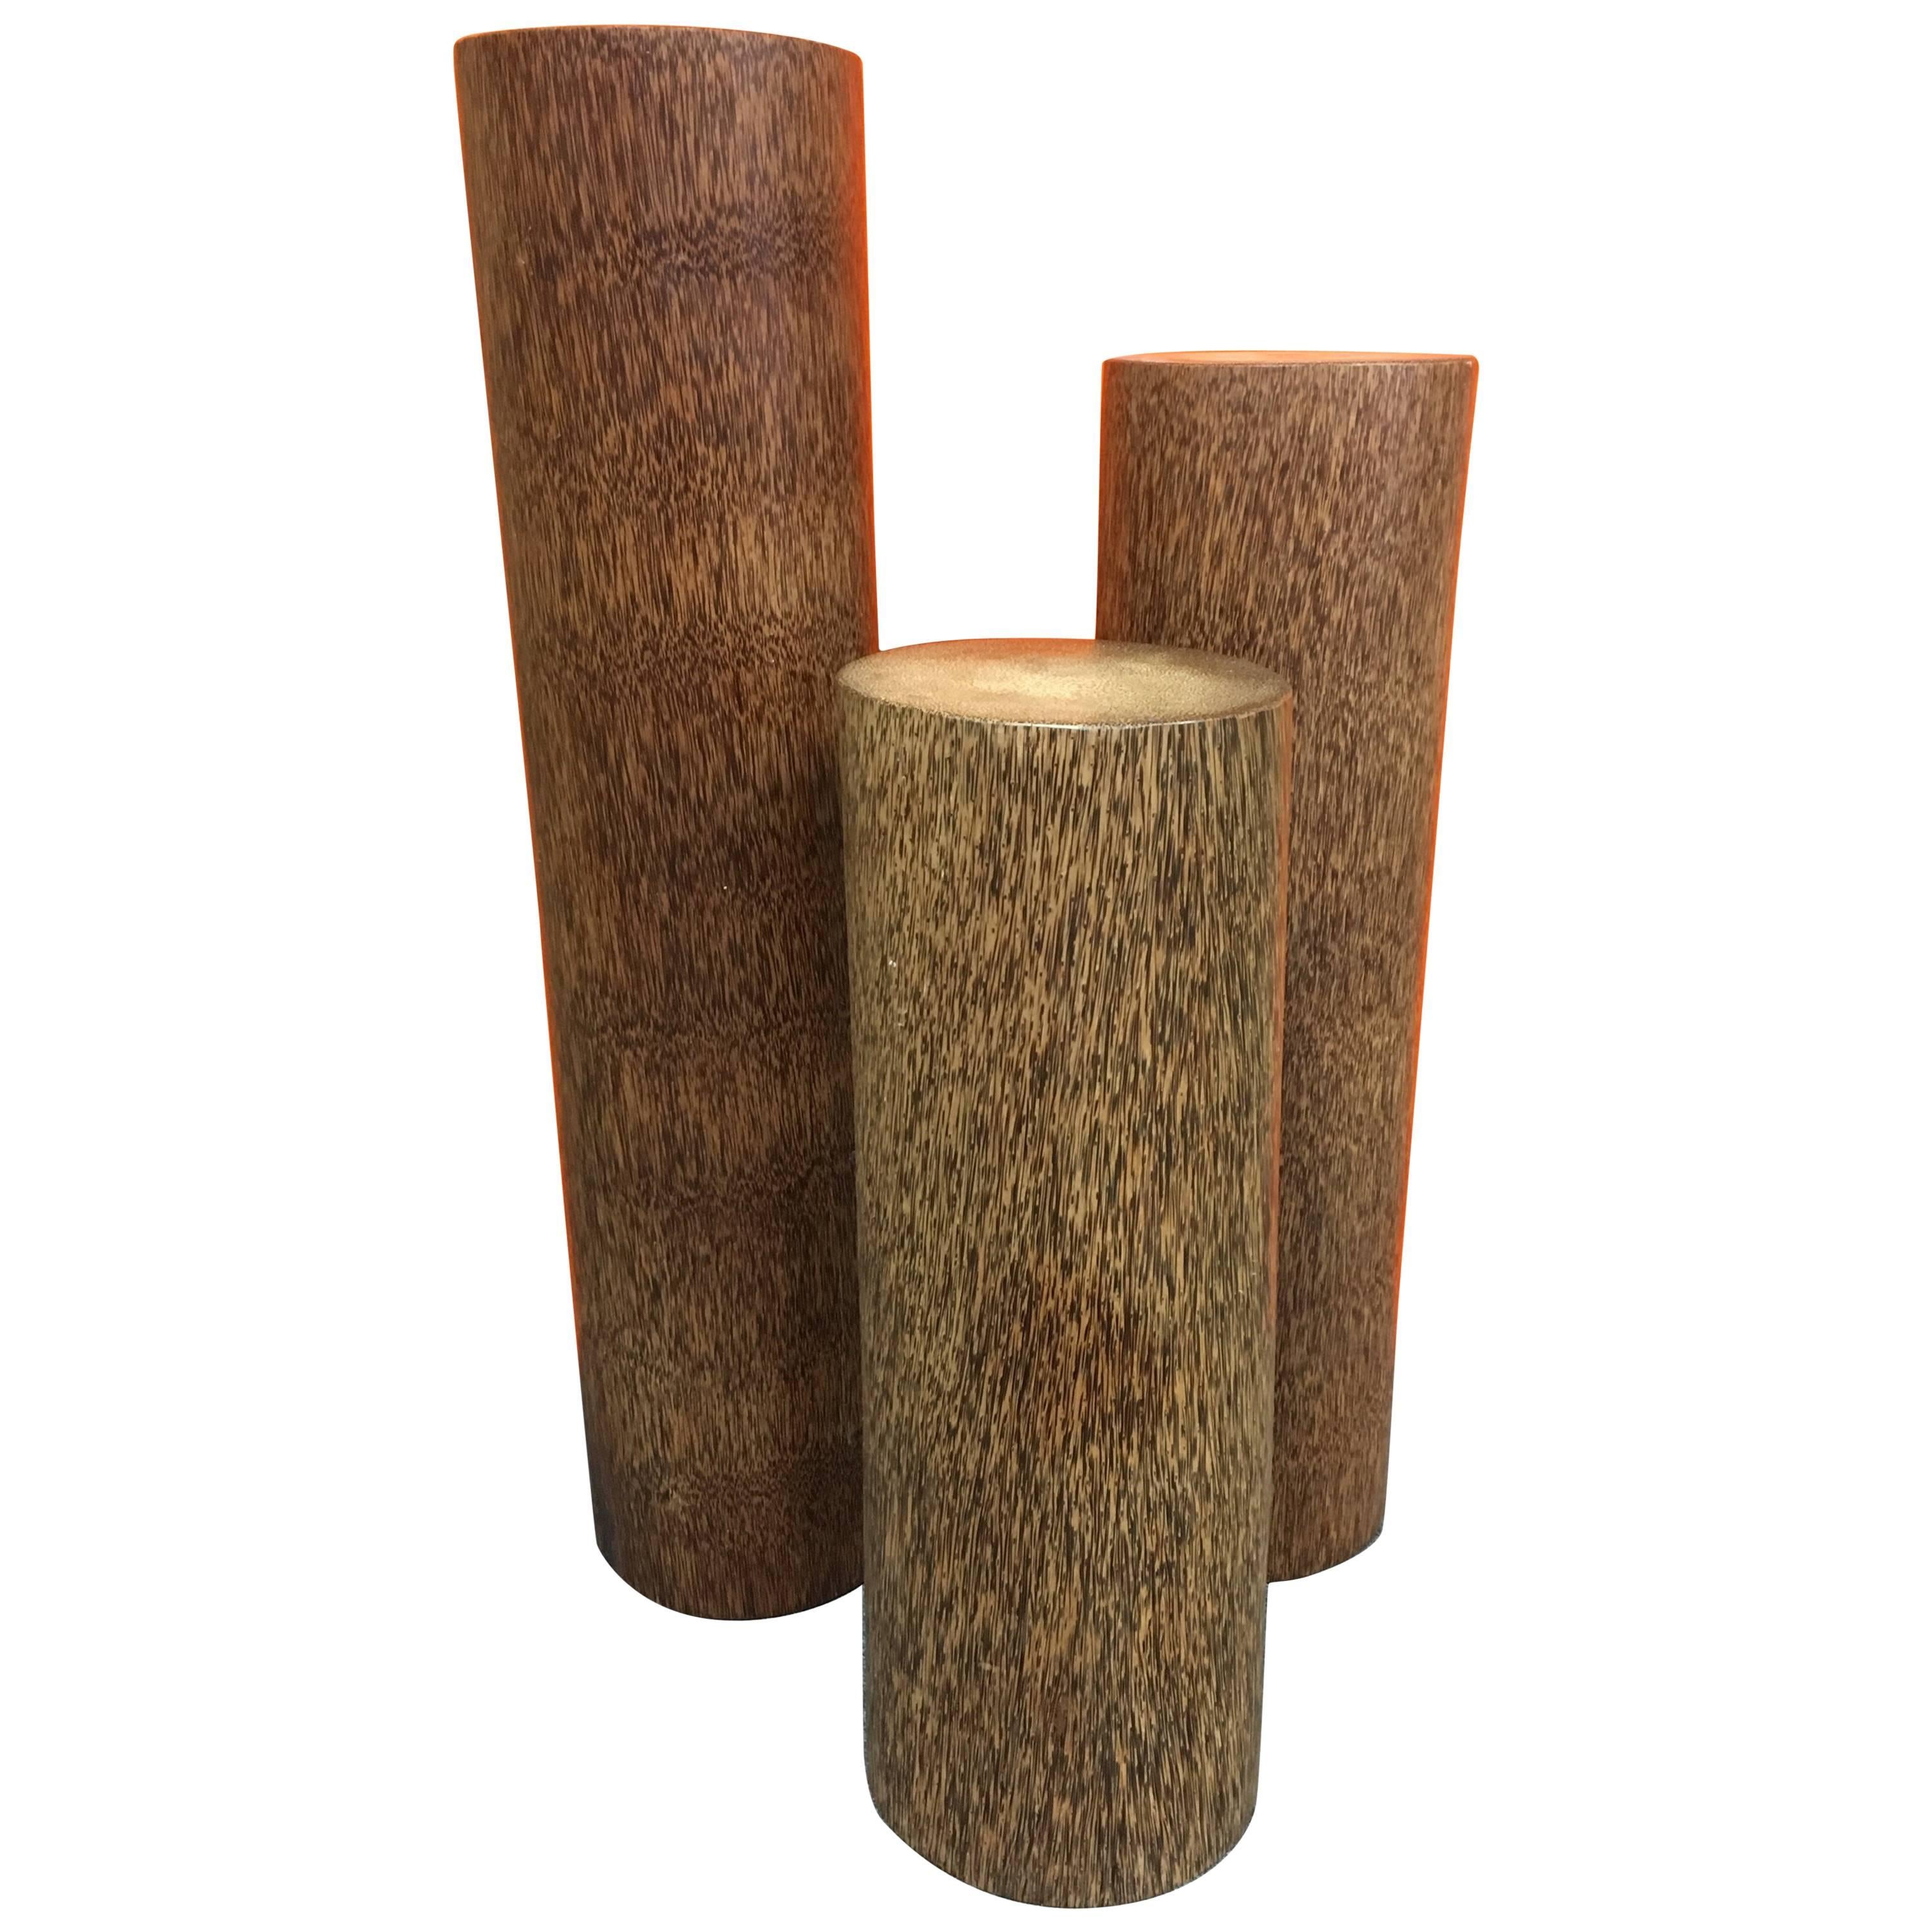 Nice Set of Three Coconut Wood Tree Stump Pedestals